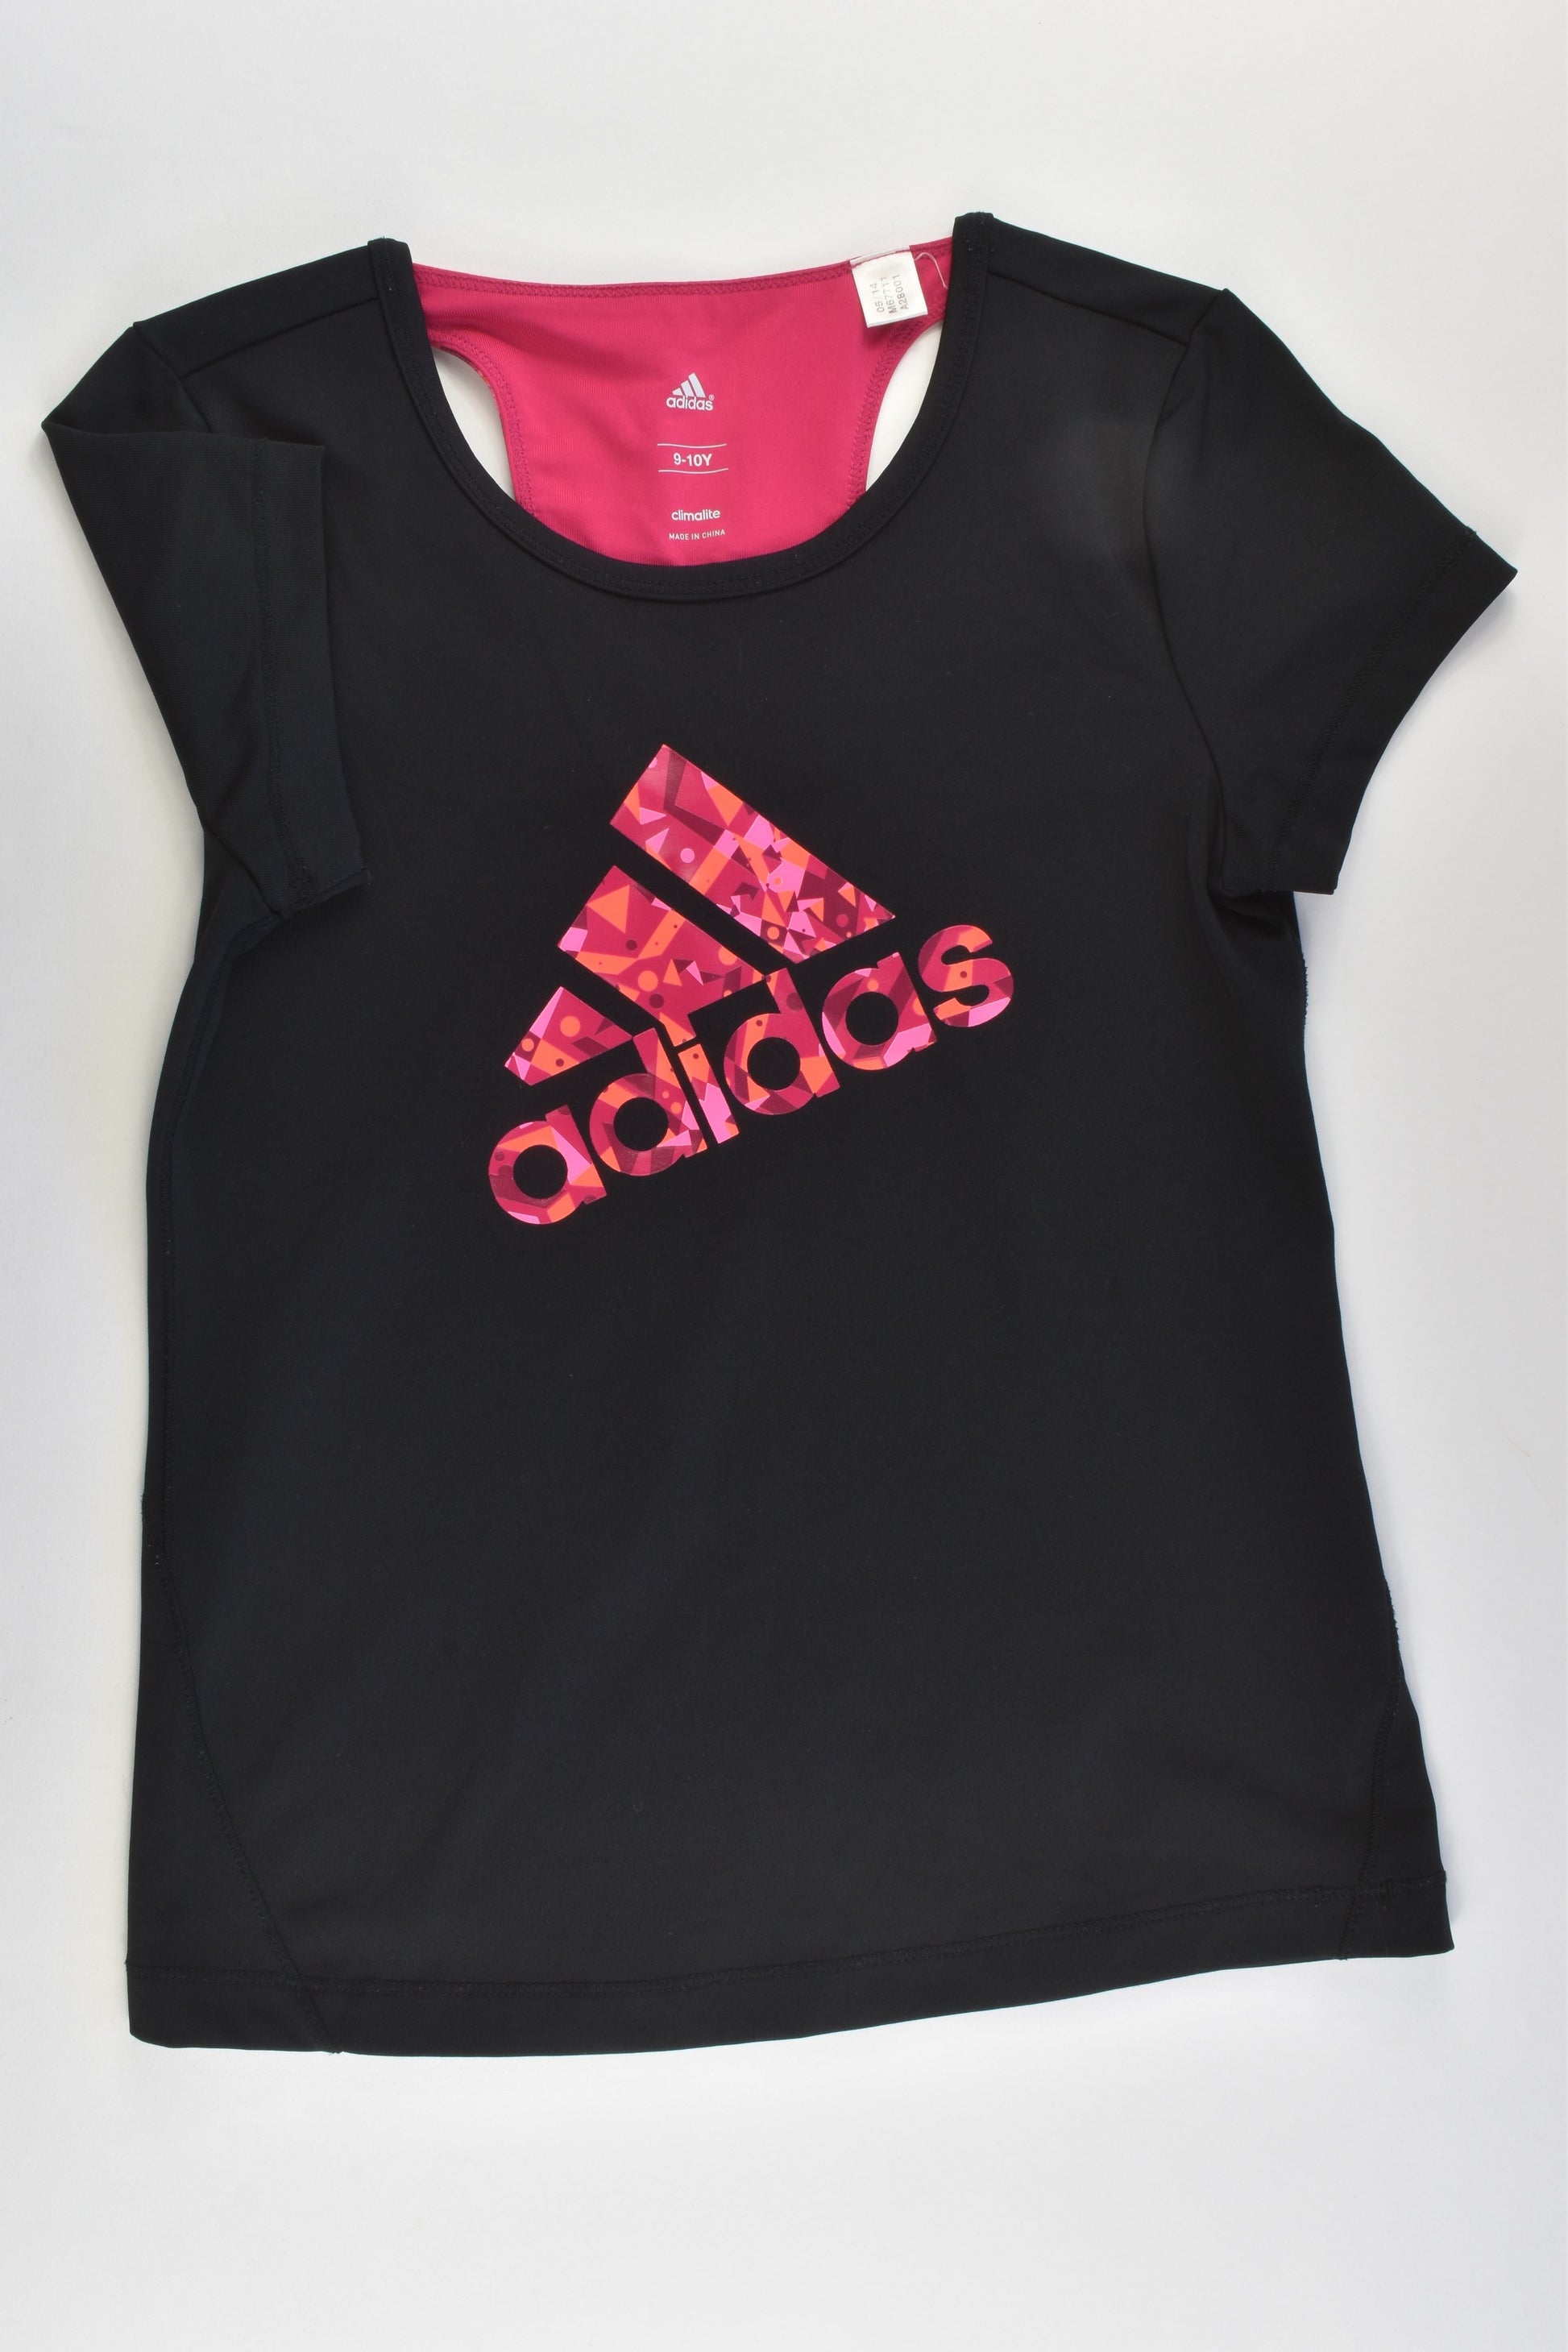 Adidas Size 9-10 Sport T-shirt